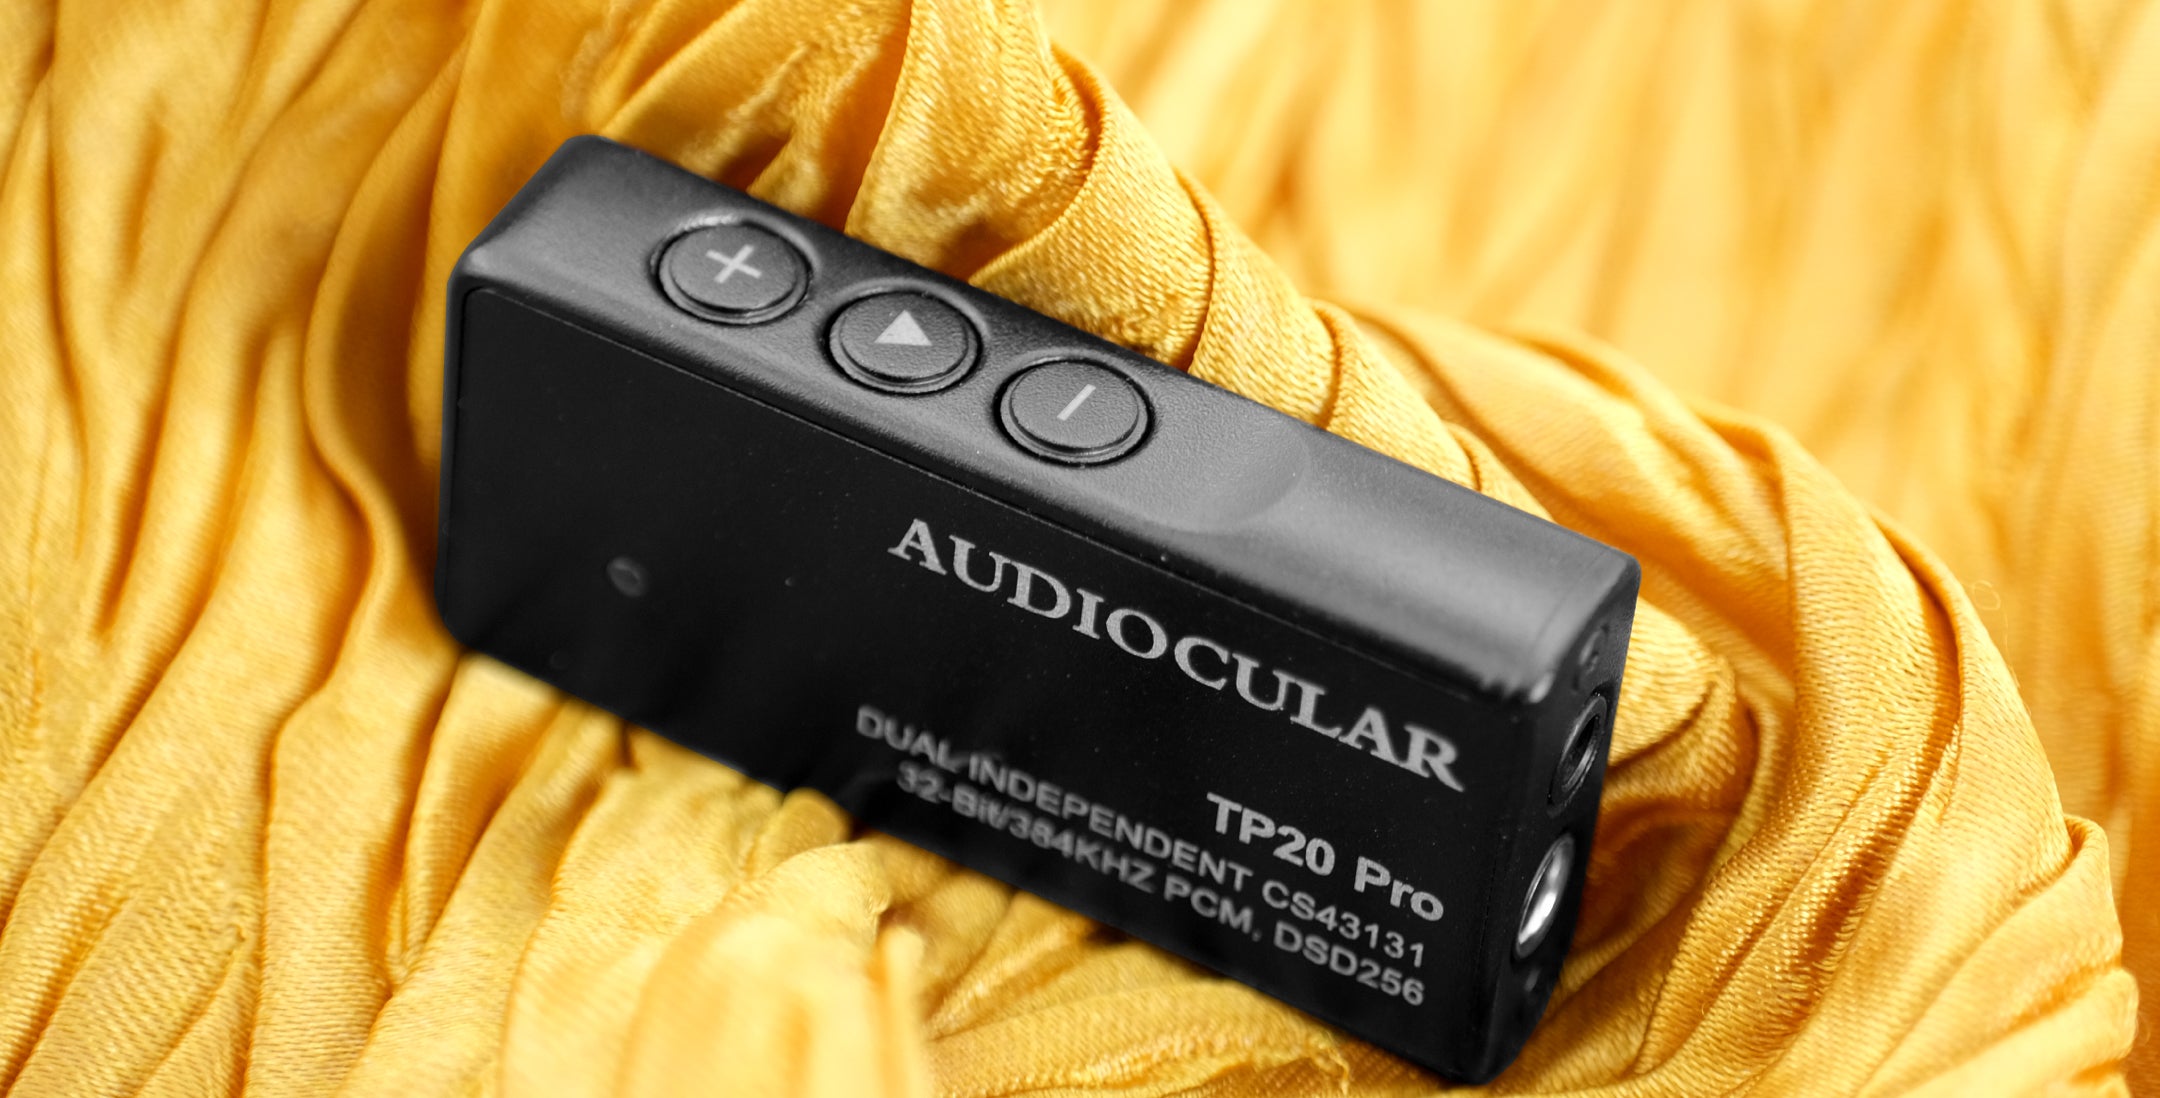 Concept kart audiocular tp20 pro cs43131 portable dac   amp black 2   10